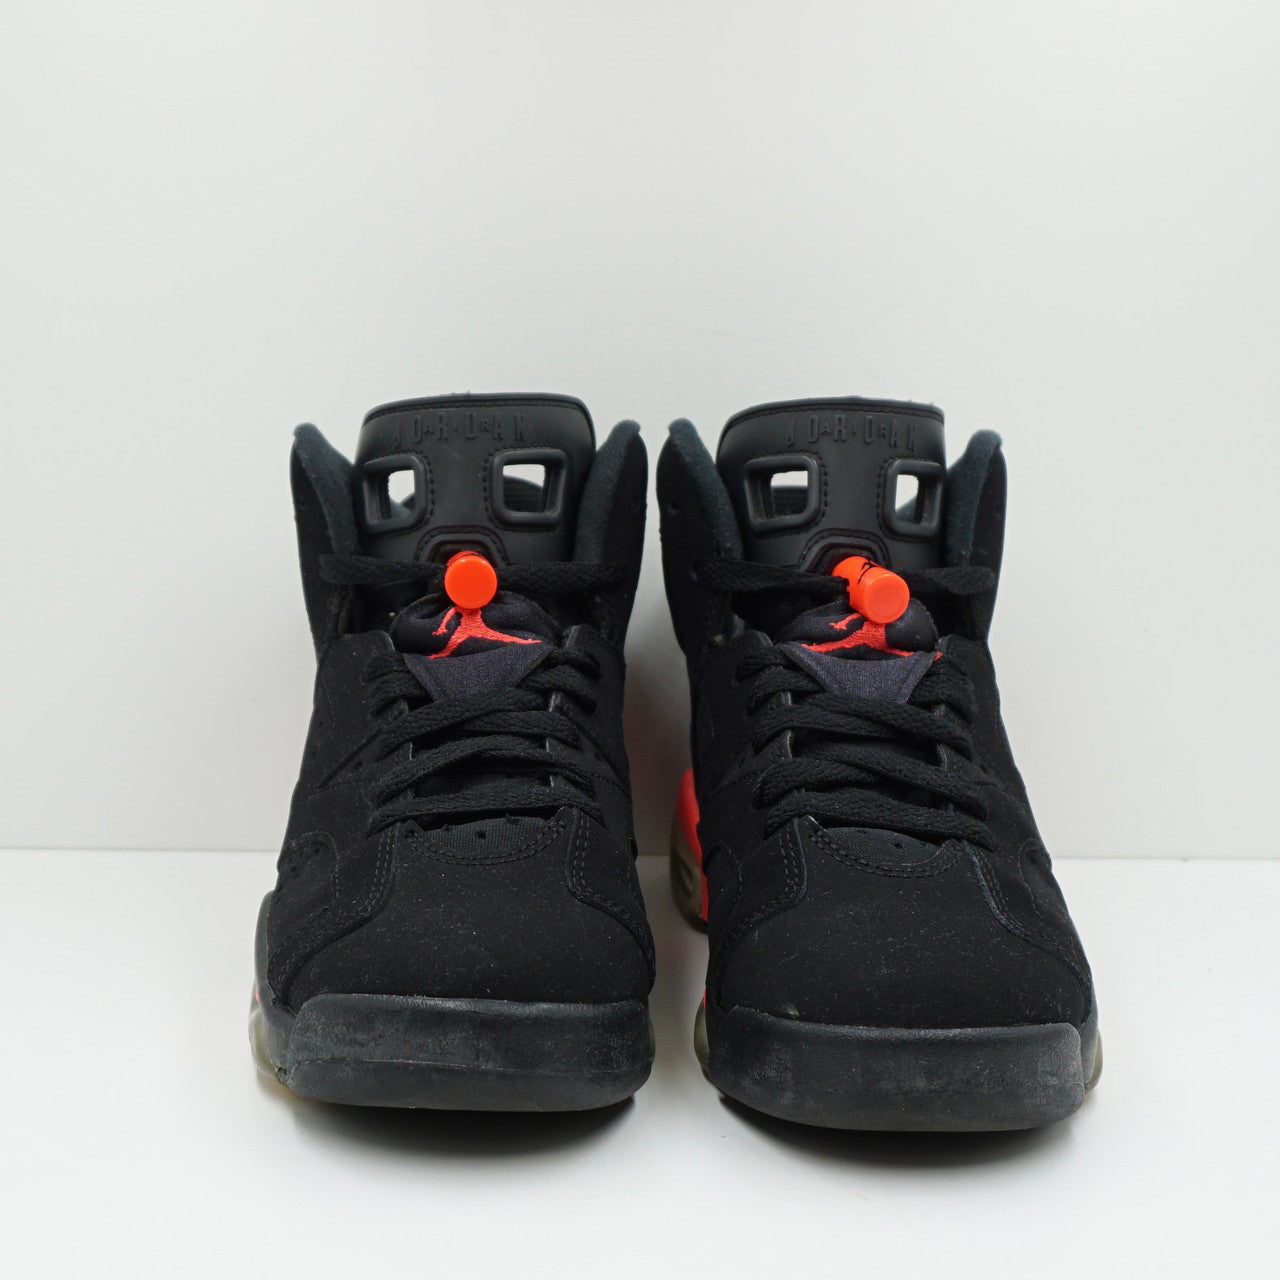 Jordan 6 Retro Infrared Black (2014) (GS)